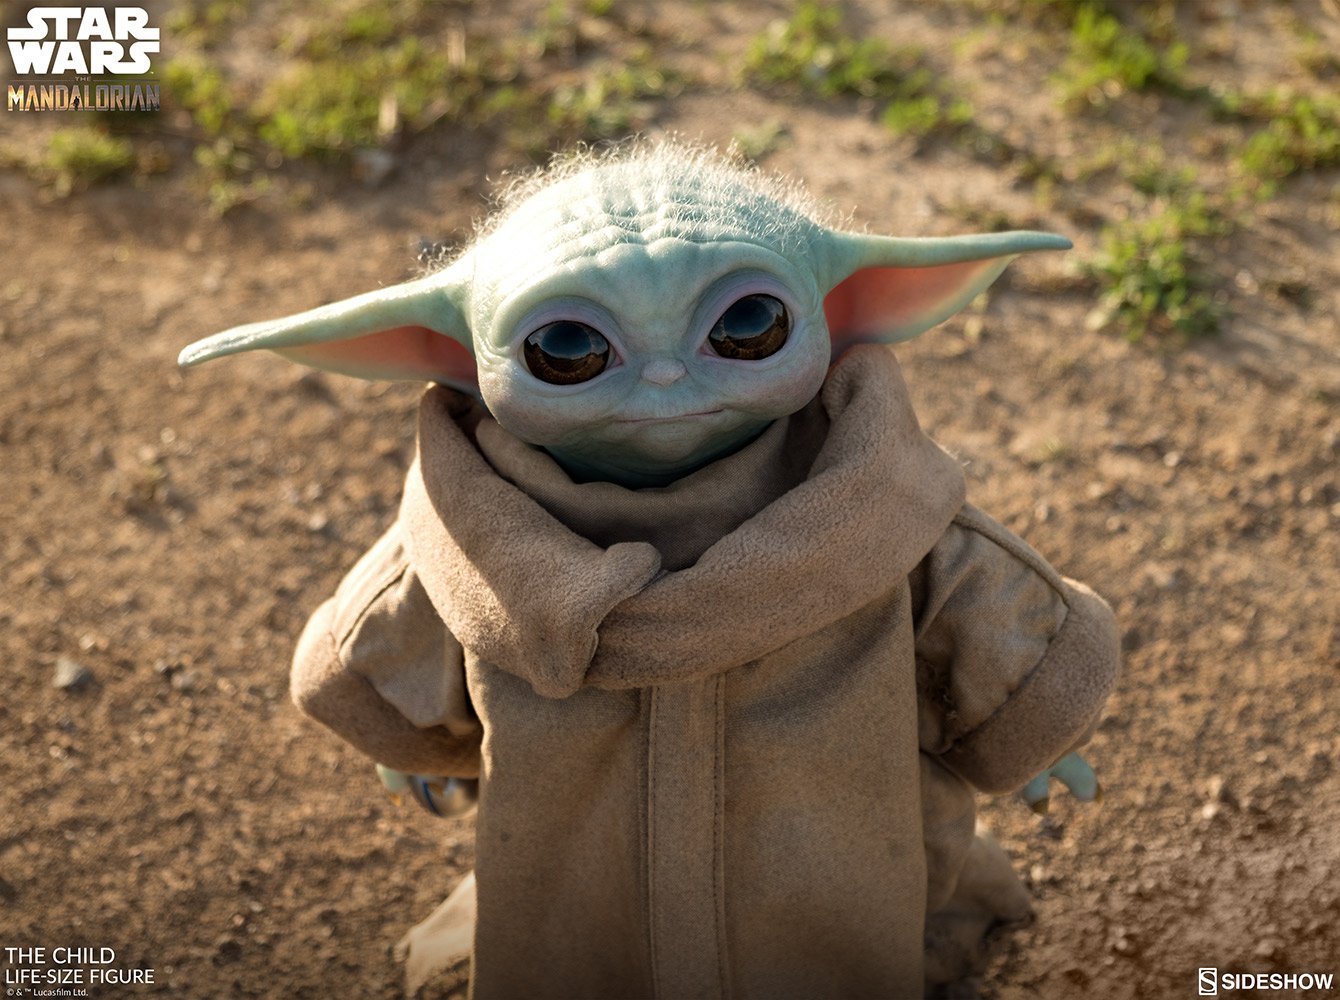 TM Baby Yoda (The Child) Life-Sized Figure 10